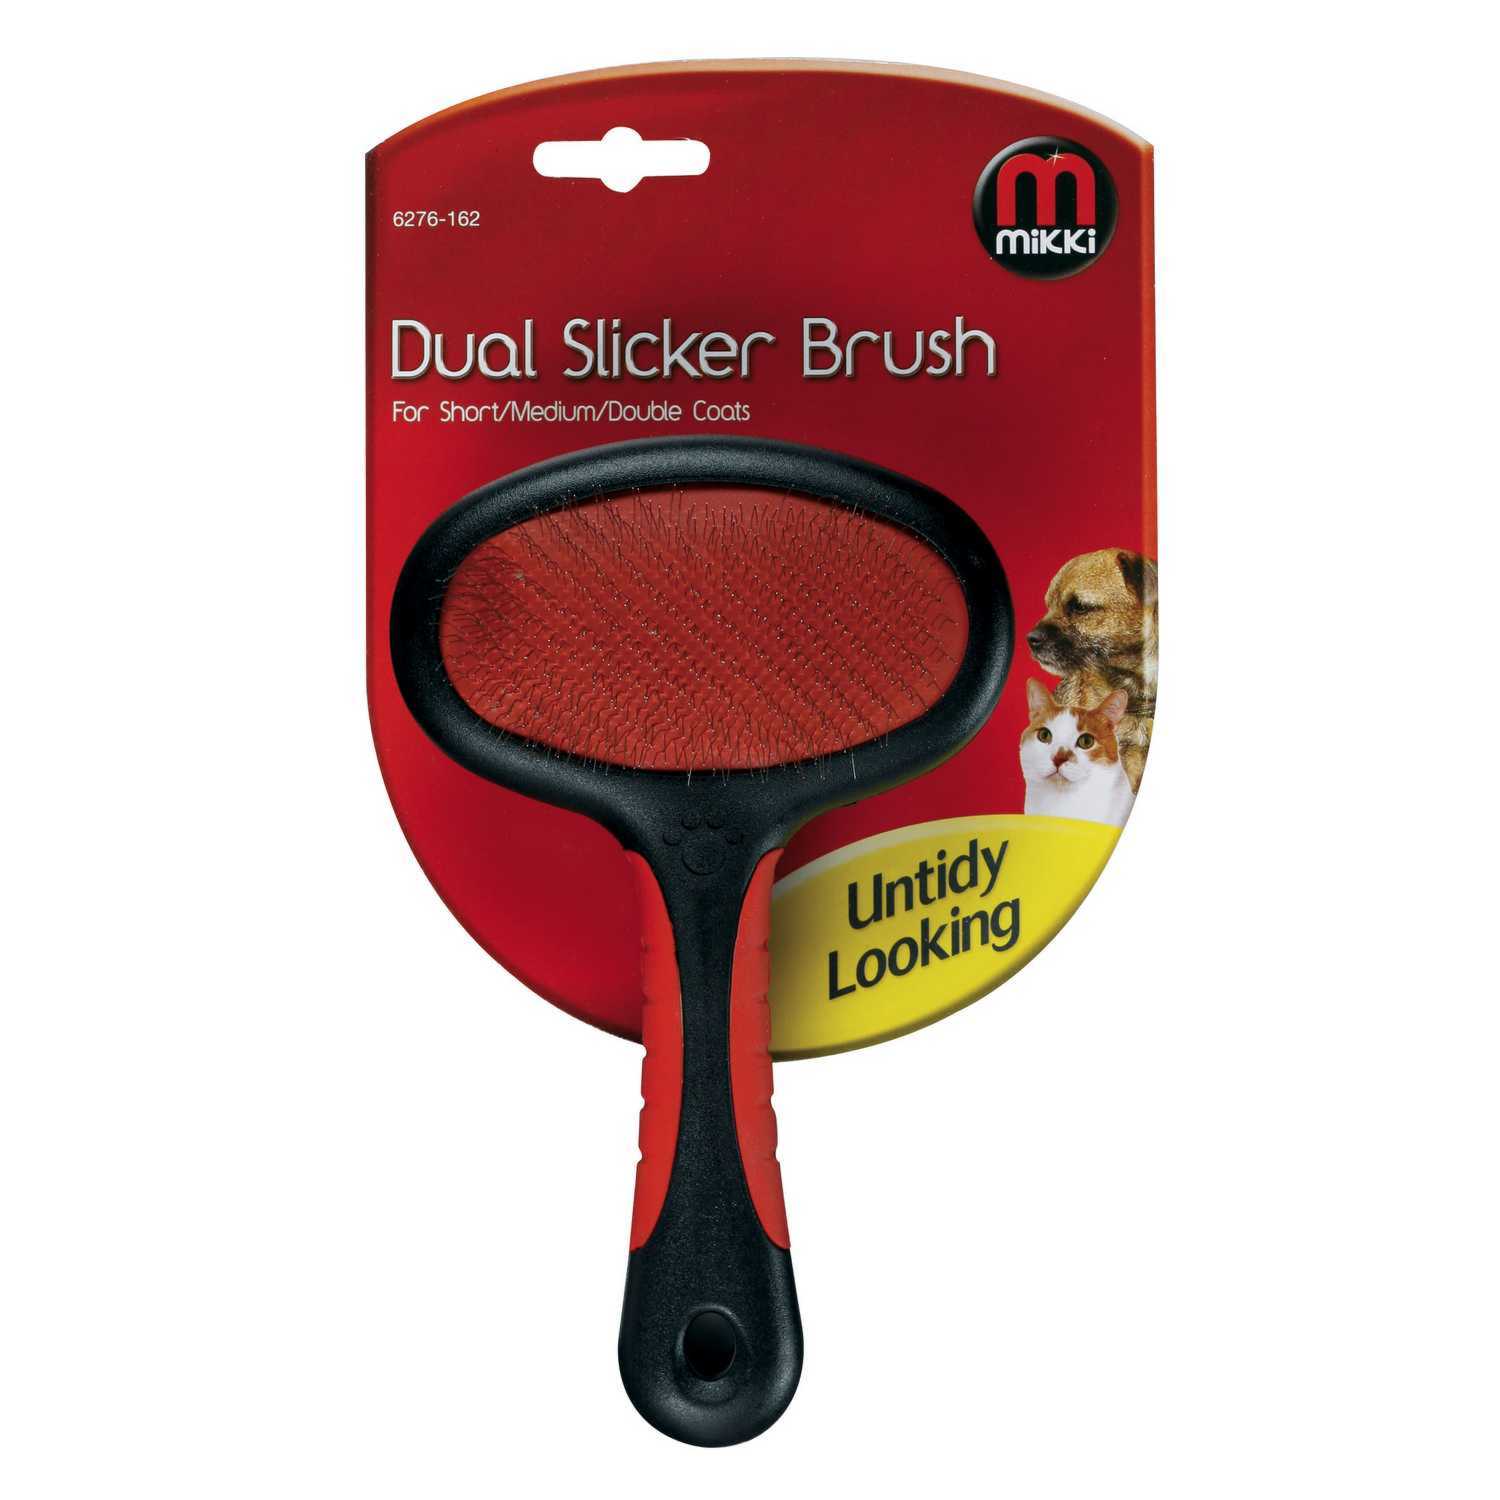 Mikki Large Dual Slicker Brush with Flexible Head Image